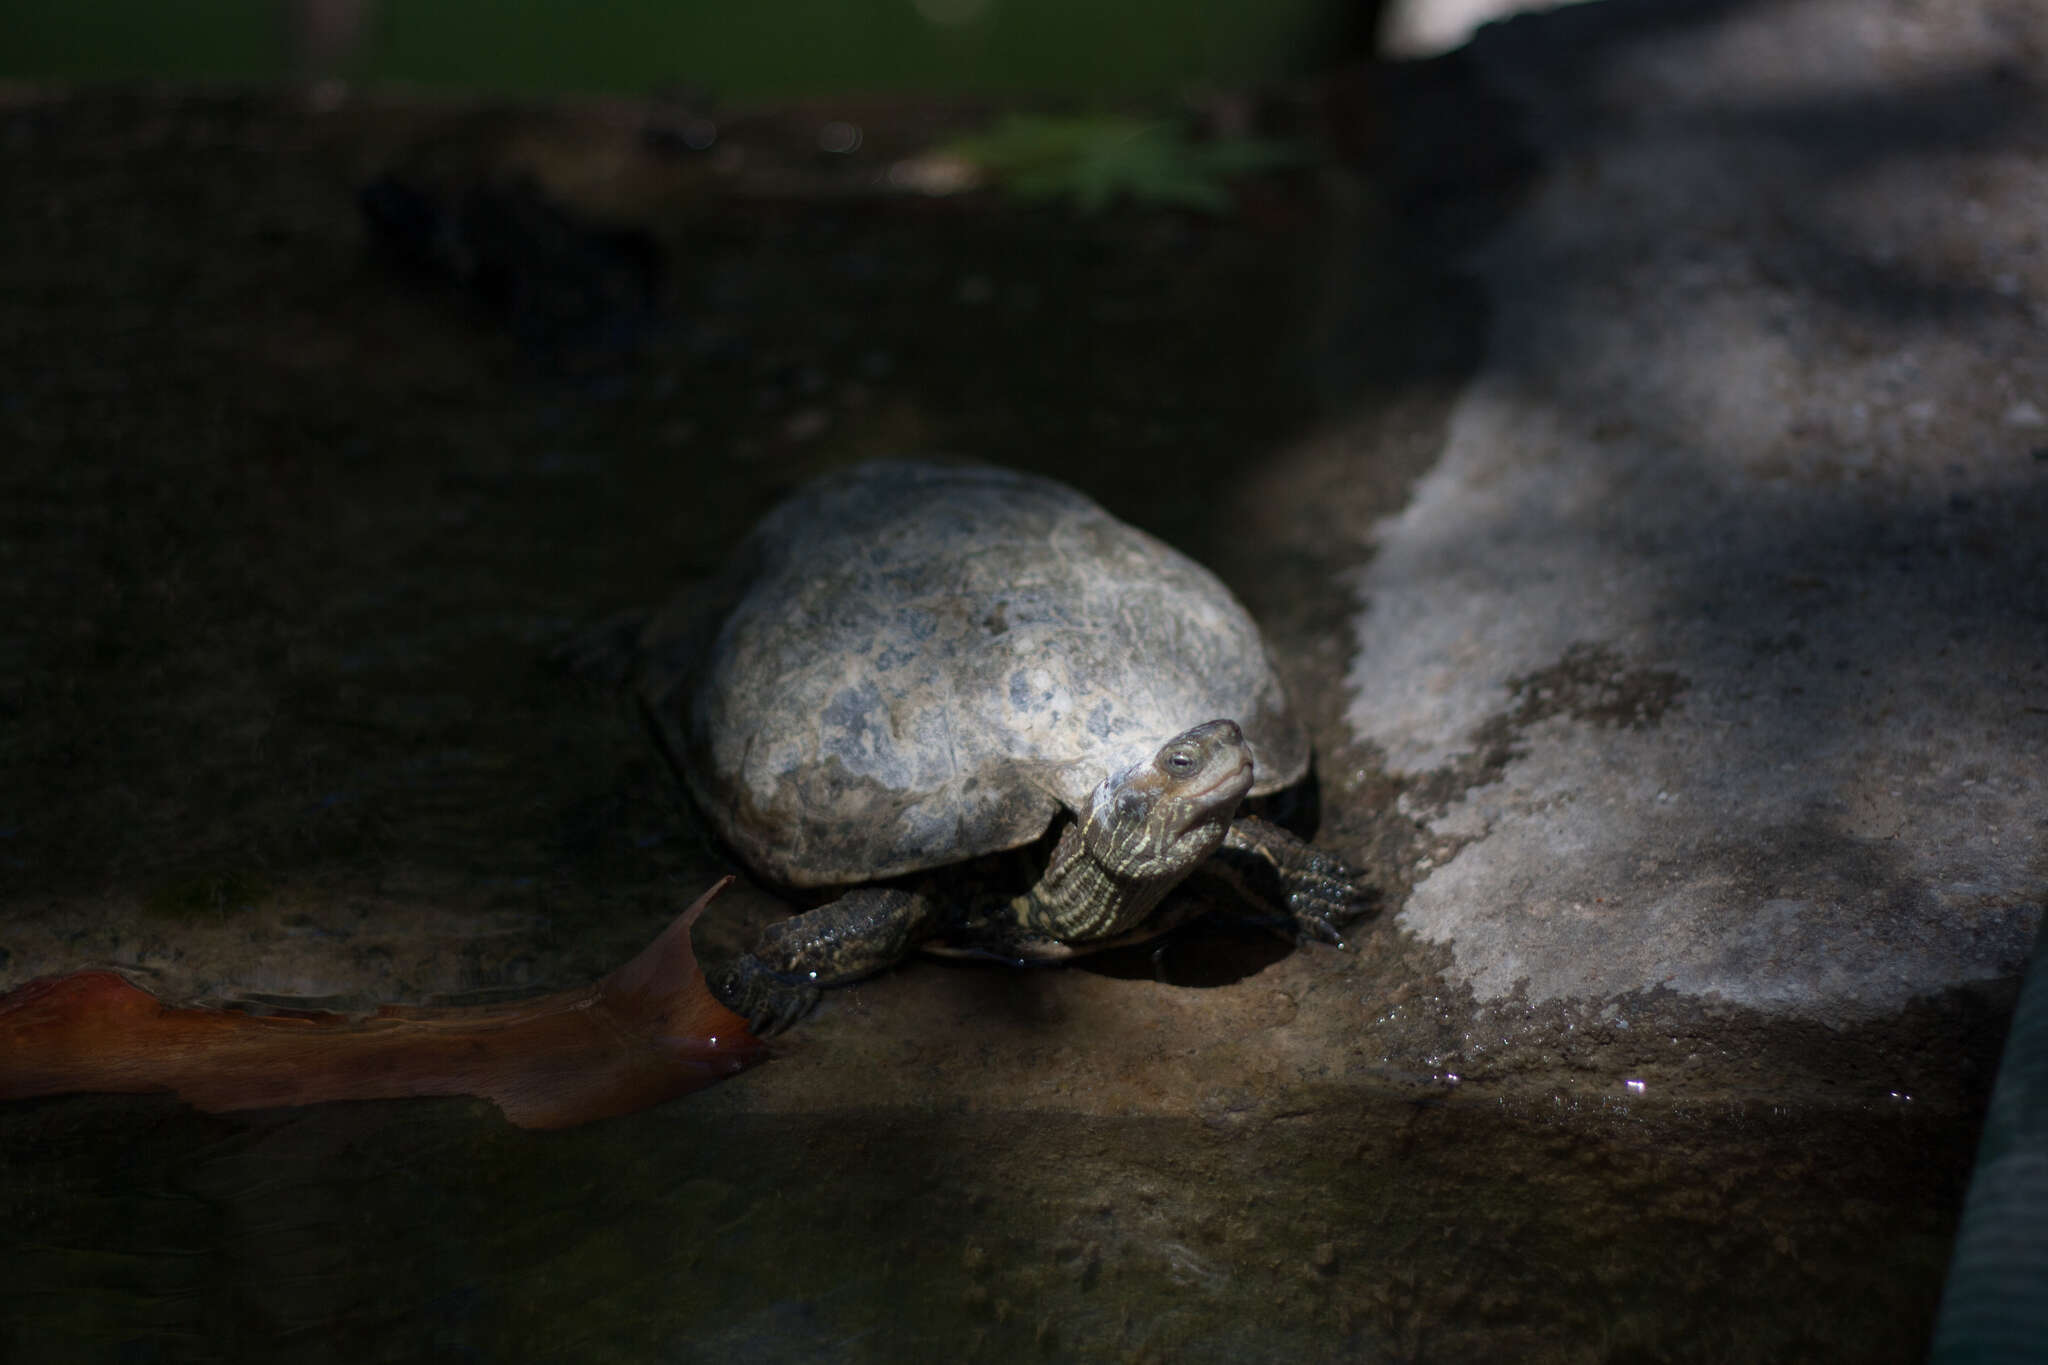 Image of Balkan pond turtle